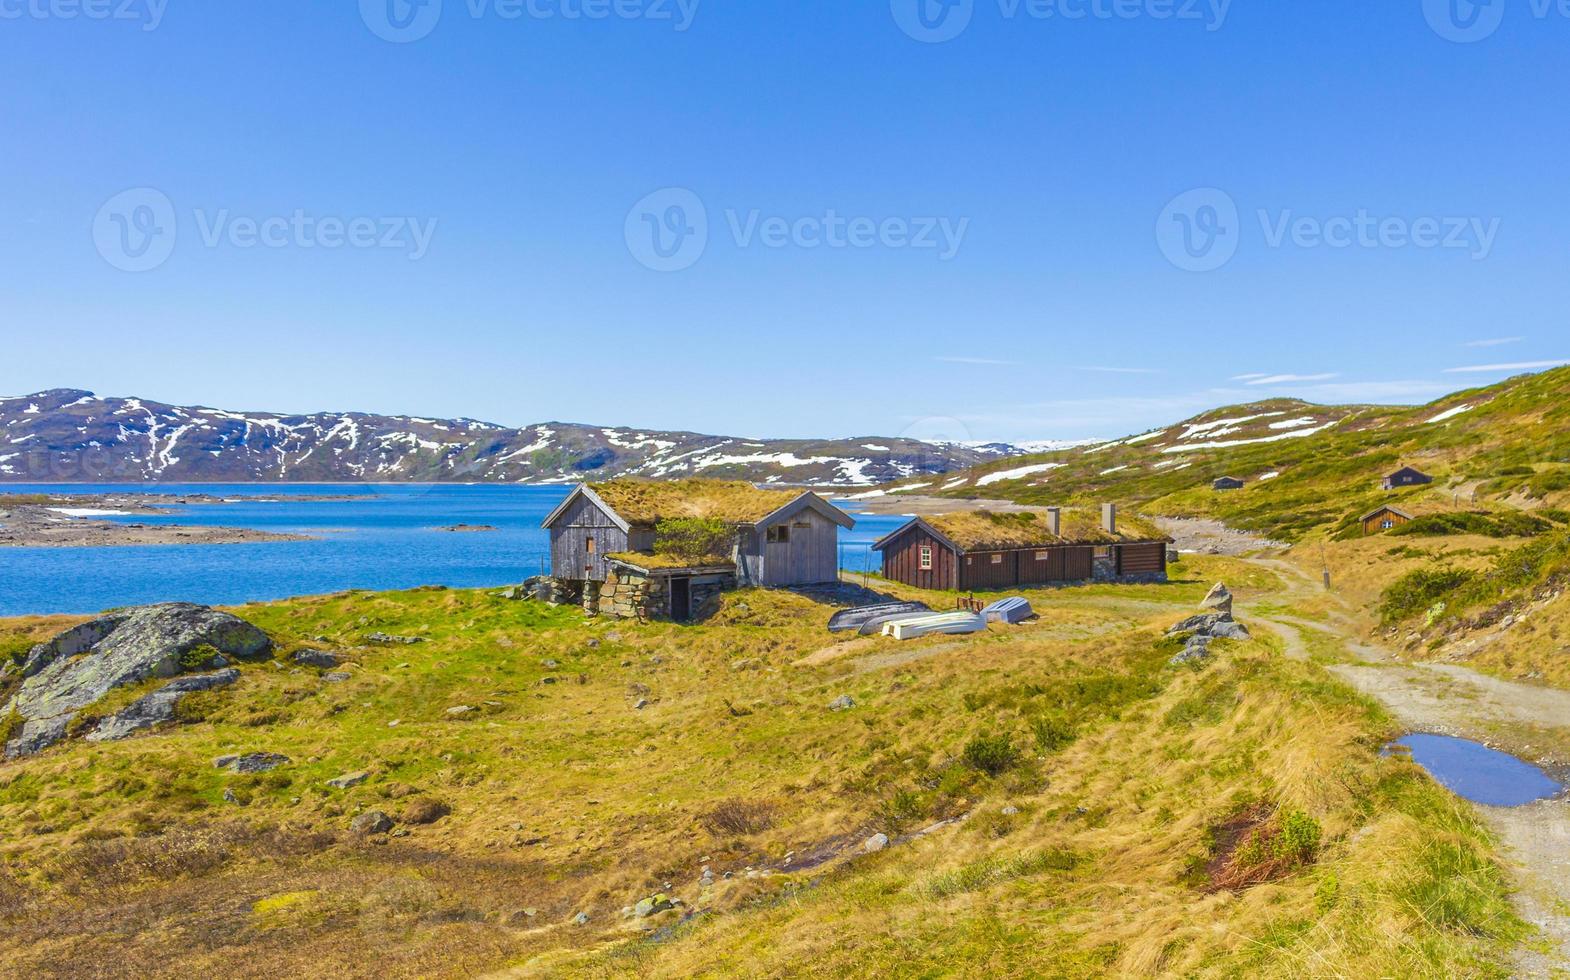 vavatn see panorama landschaft hütten schneebedeckte berge hemsedal norwegen. foto